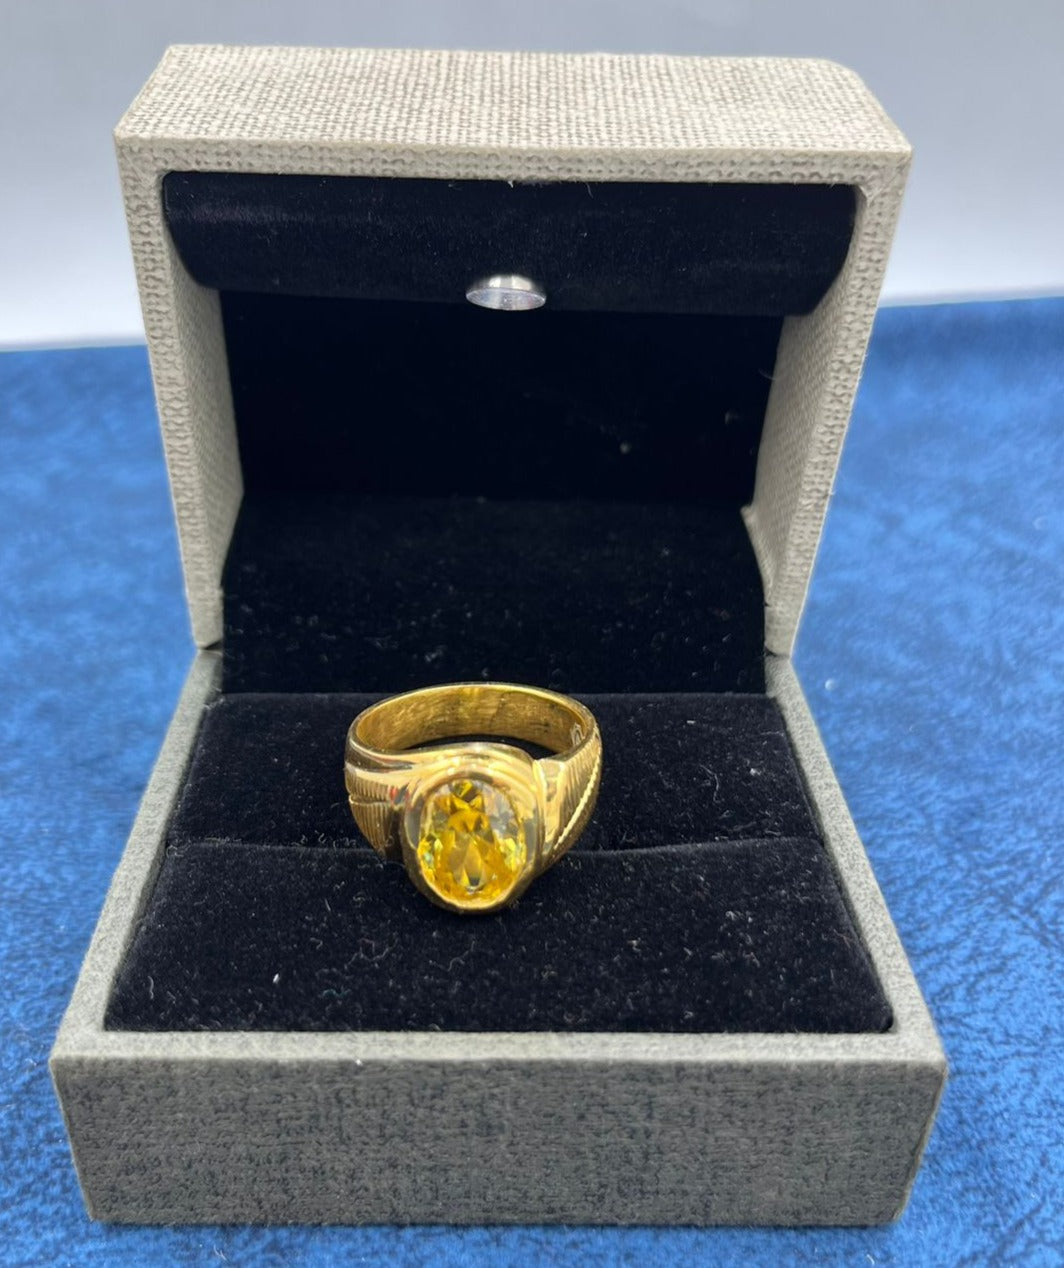 Sleek Gold Ring (2.780 Grams) in 22Kt Gold for Women | Mohan Jewellery